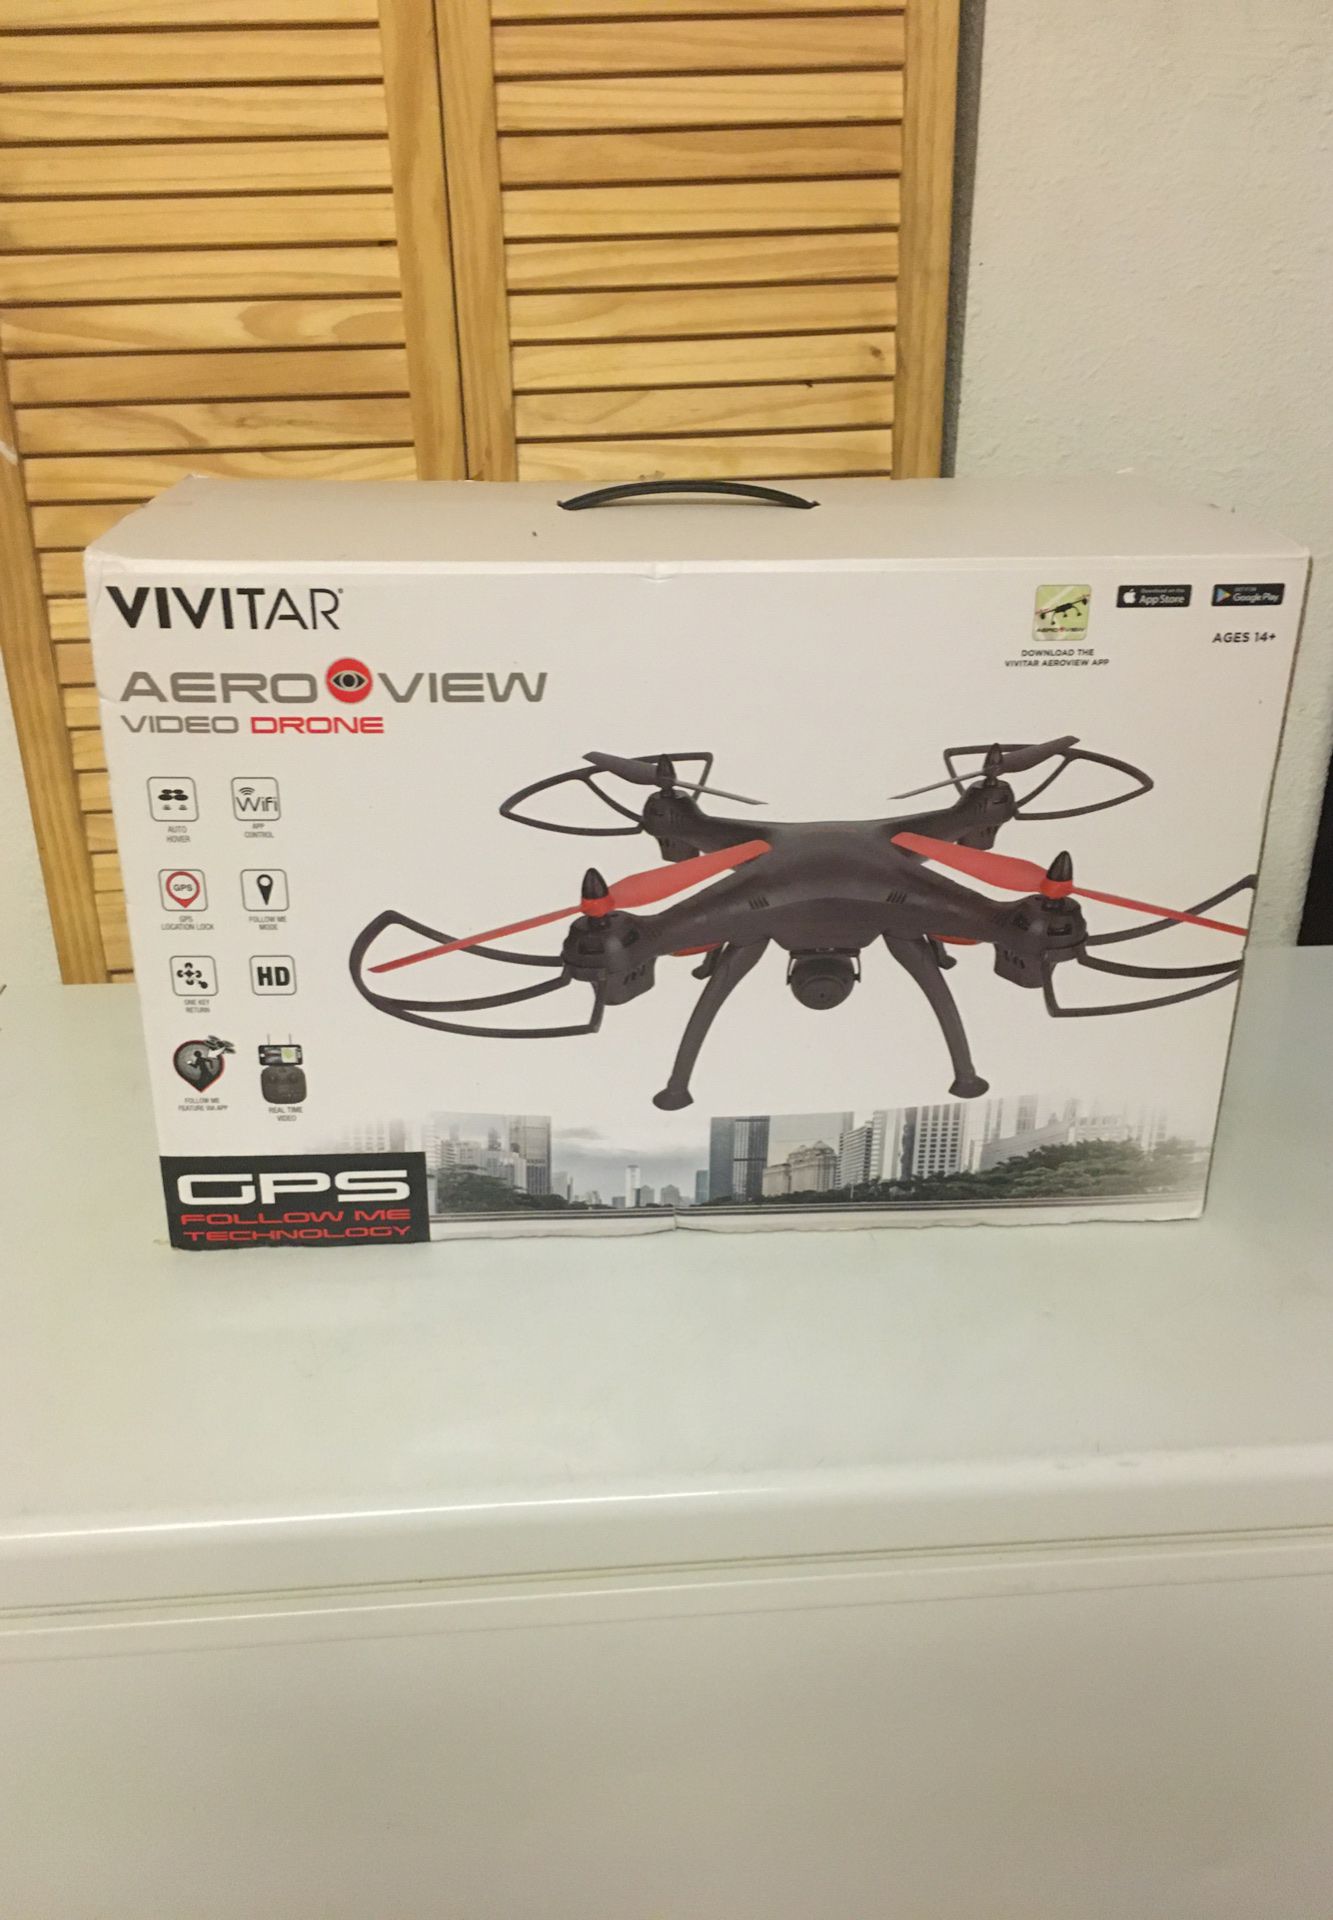 Vivitar aero view video drone